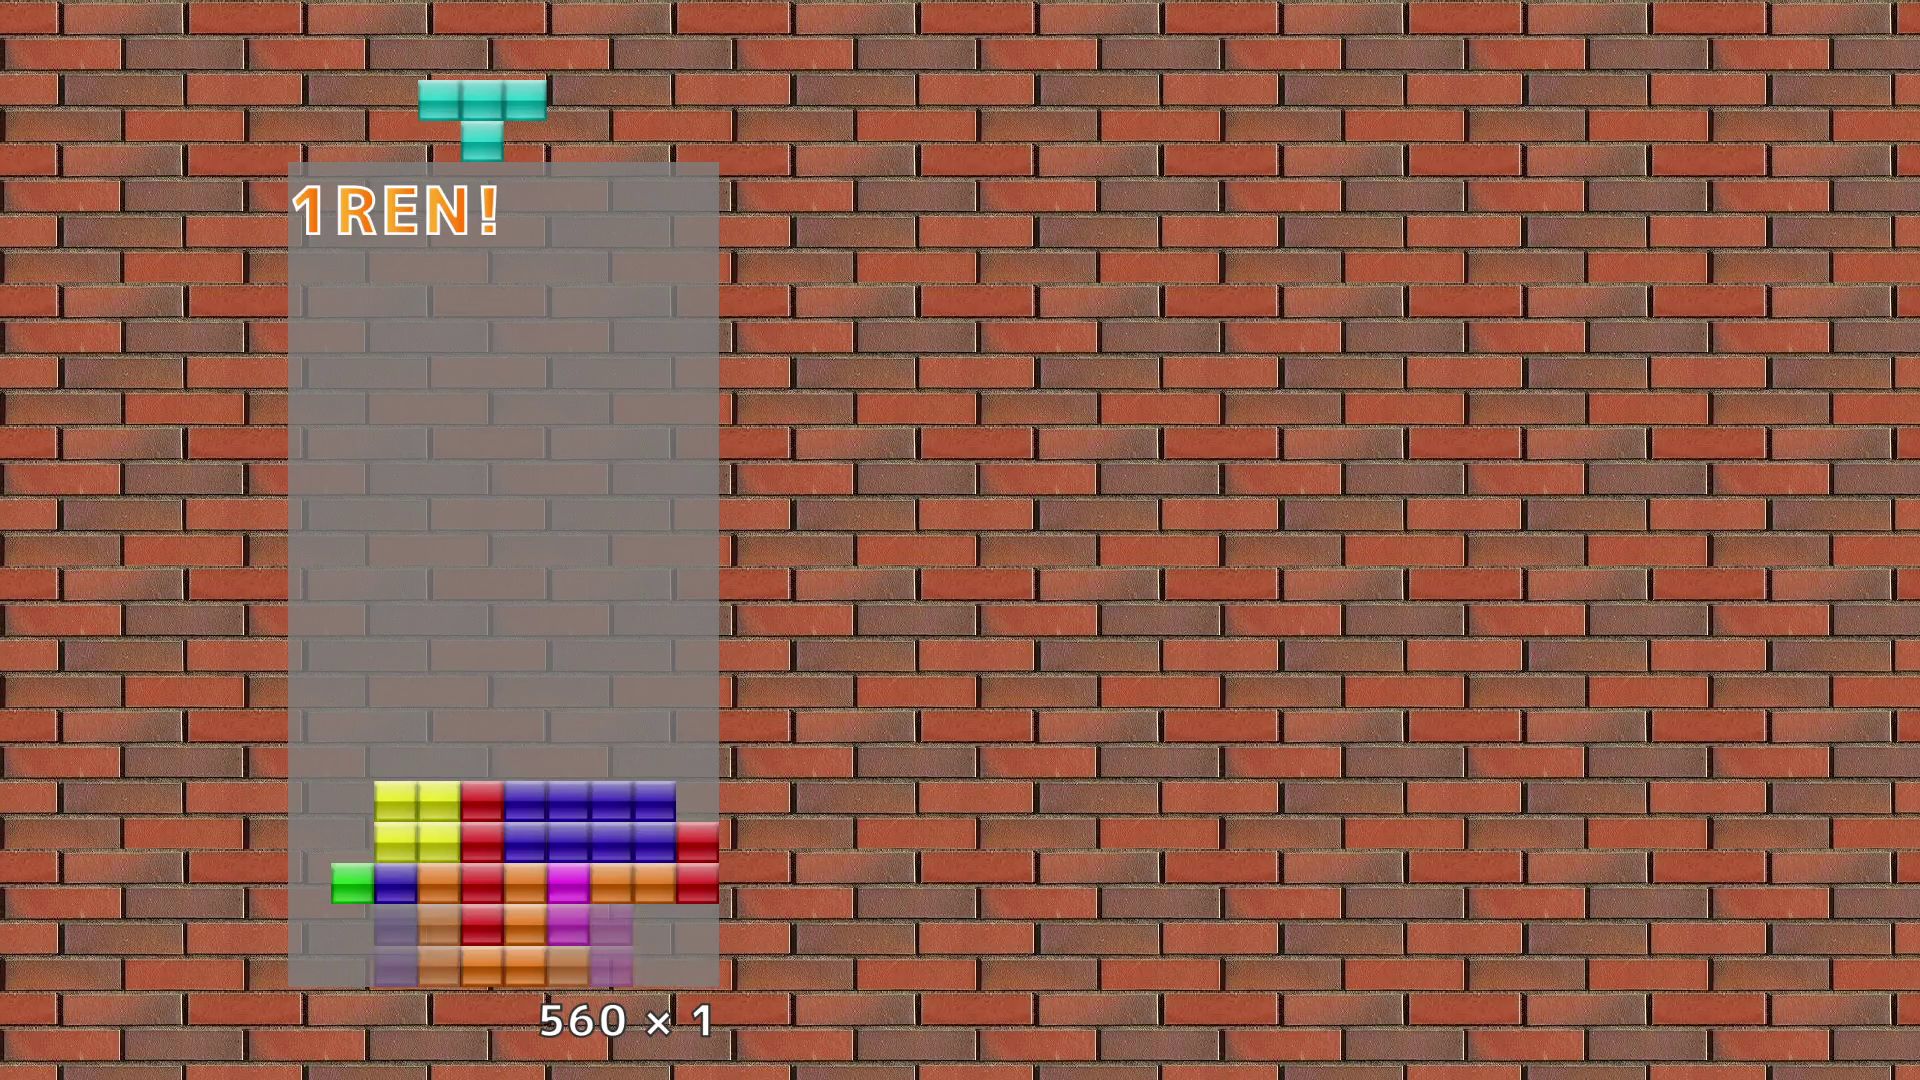 Sega tetris (0.1.17.409)